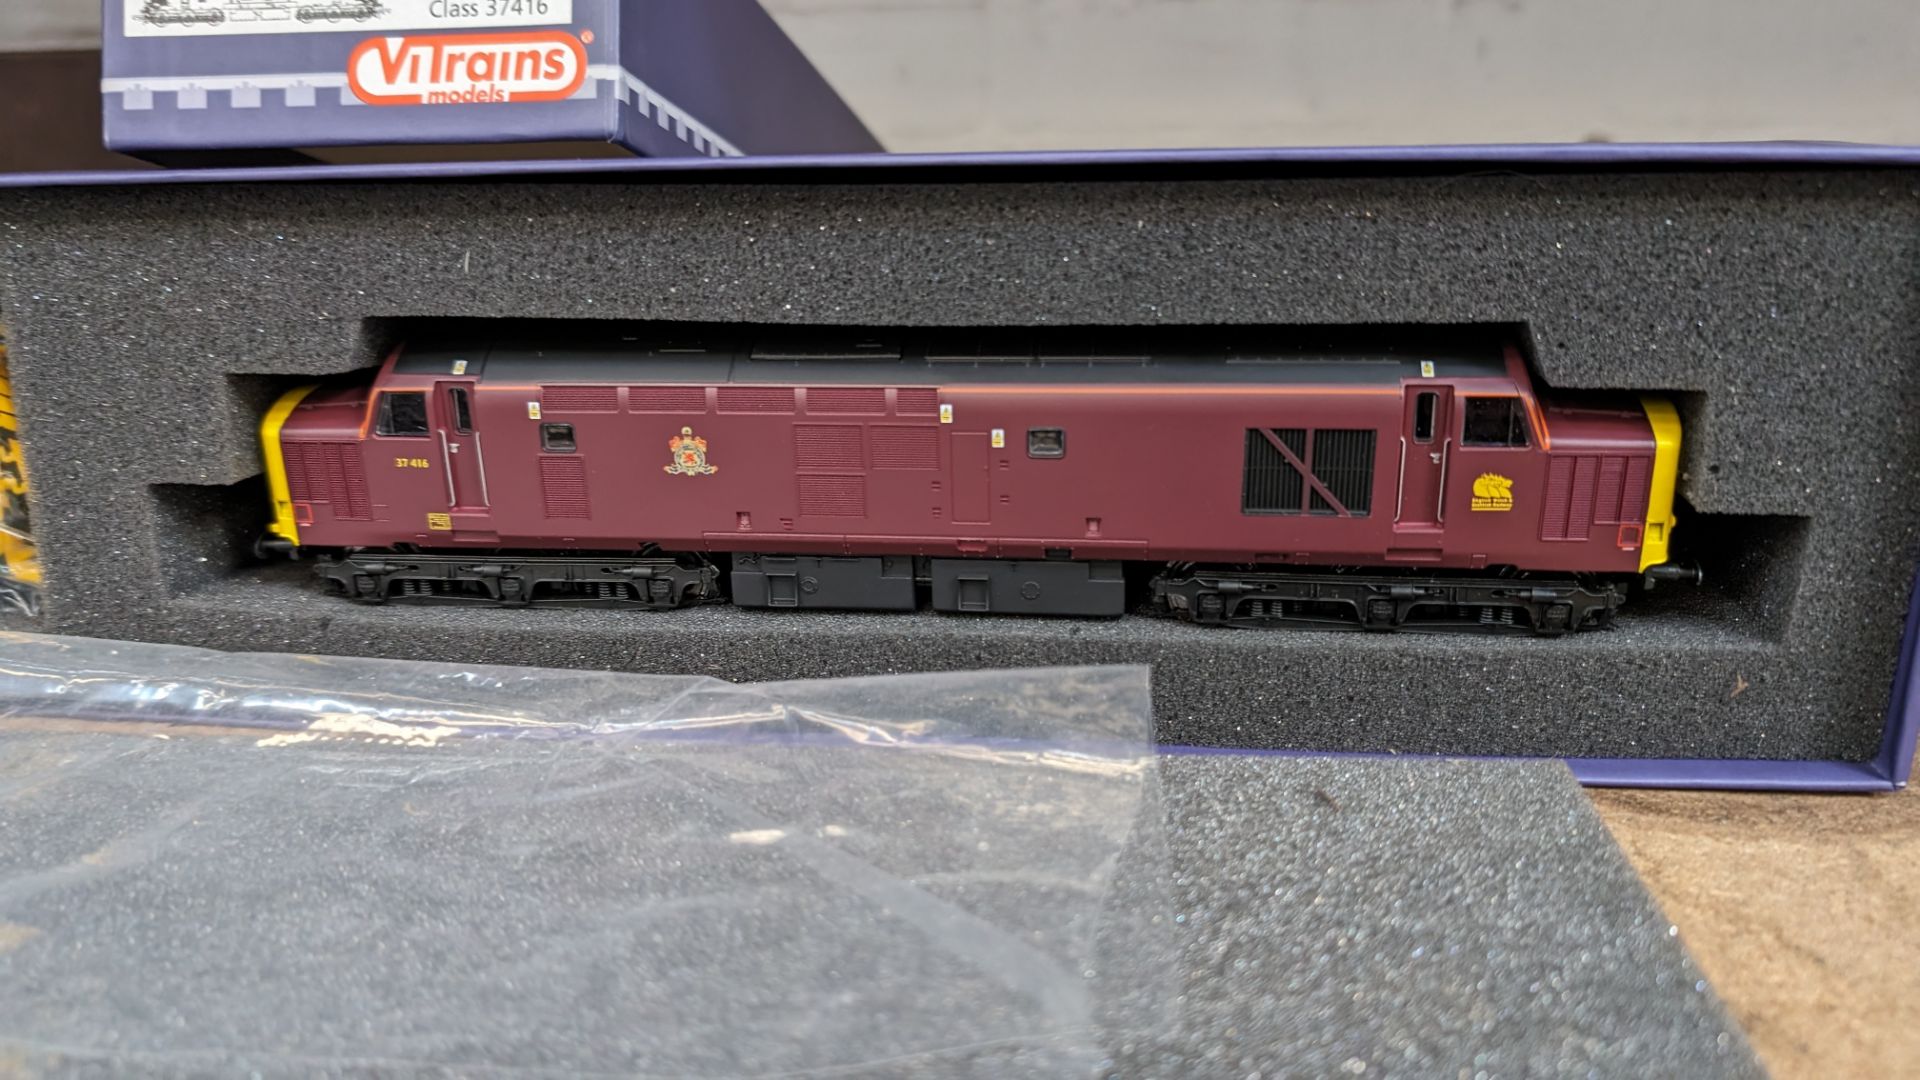 ViTrains Locomotive Class 37416 00 model train (2018) - Image 4 of 9